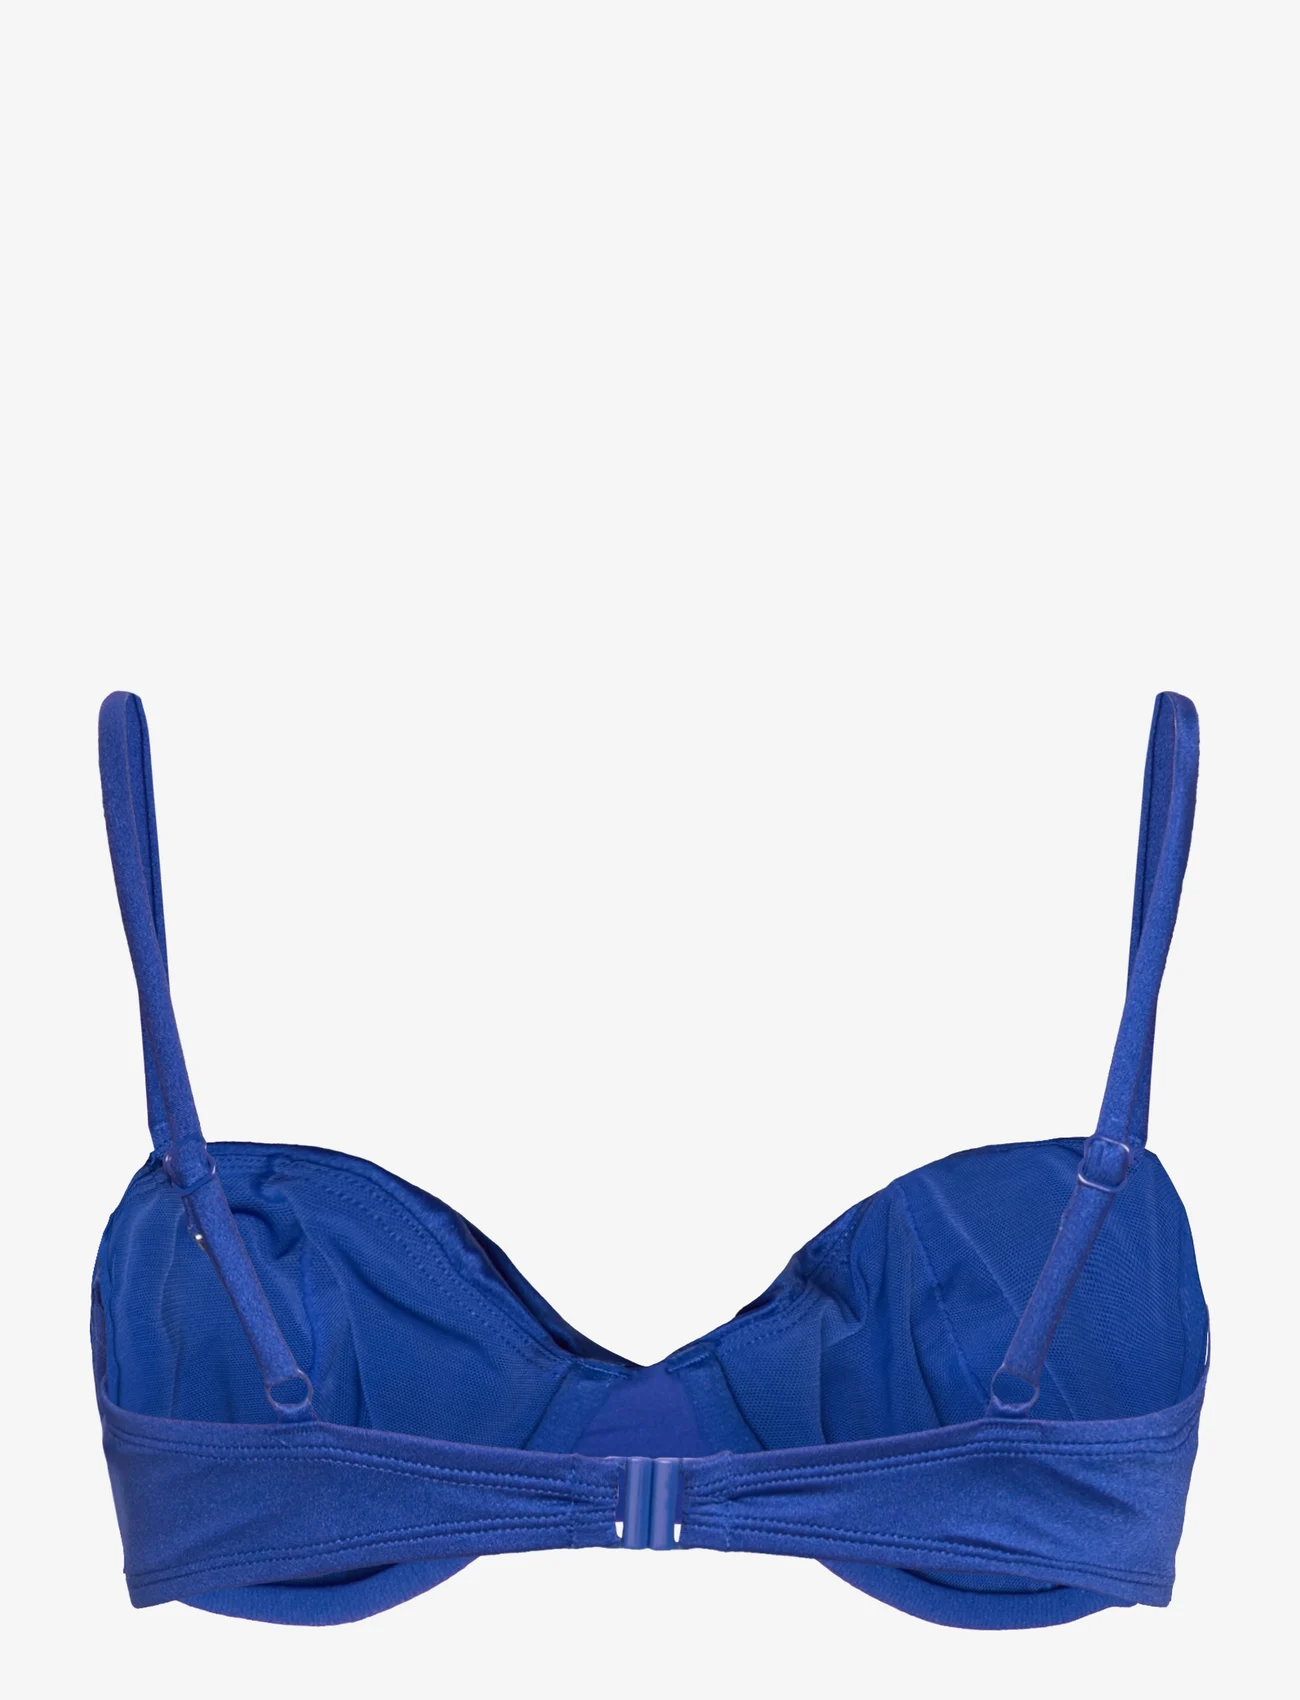 Hunkemöller - Bari ub - wired bikinitops - cobalt blue - 1